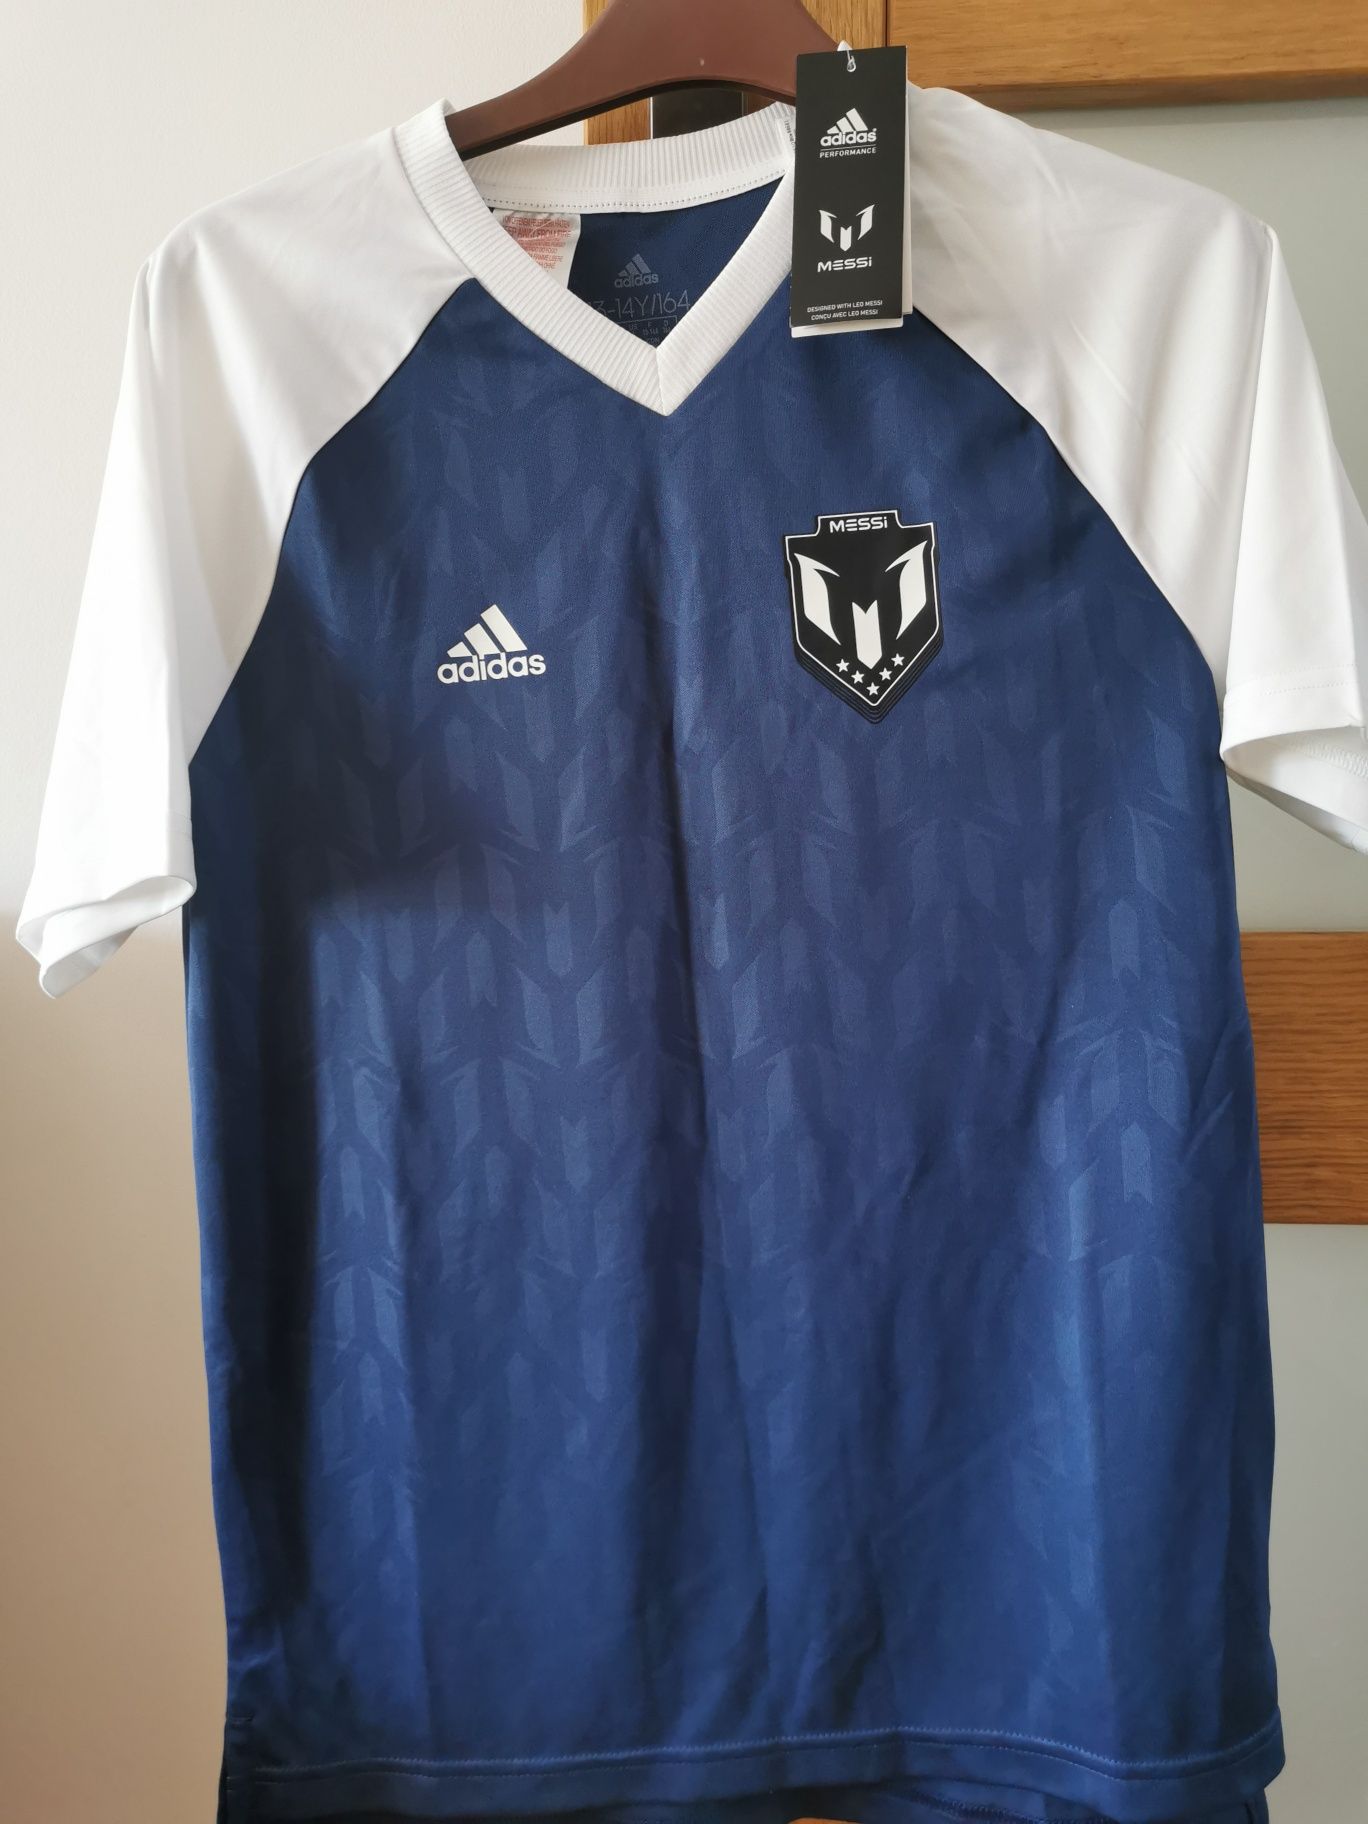 Adidas koszulka piłkarska MESSI 164 NOWA Z METKĄ